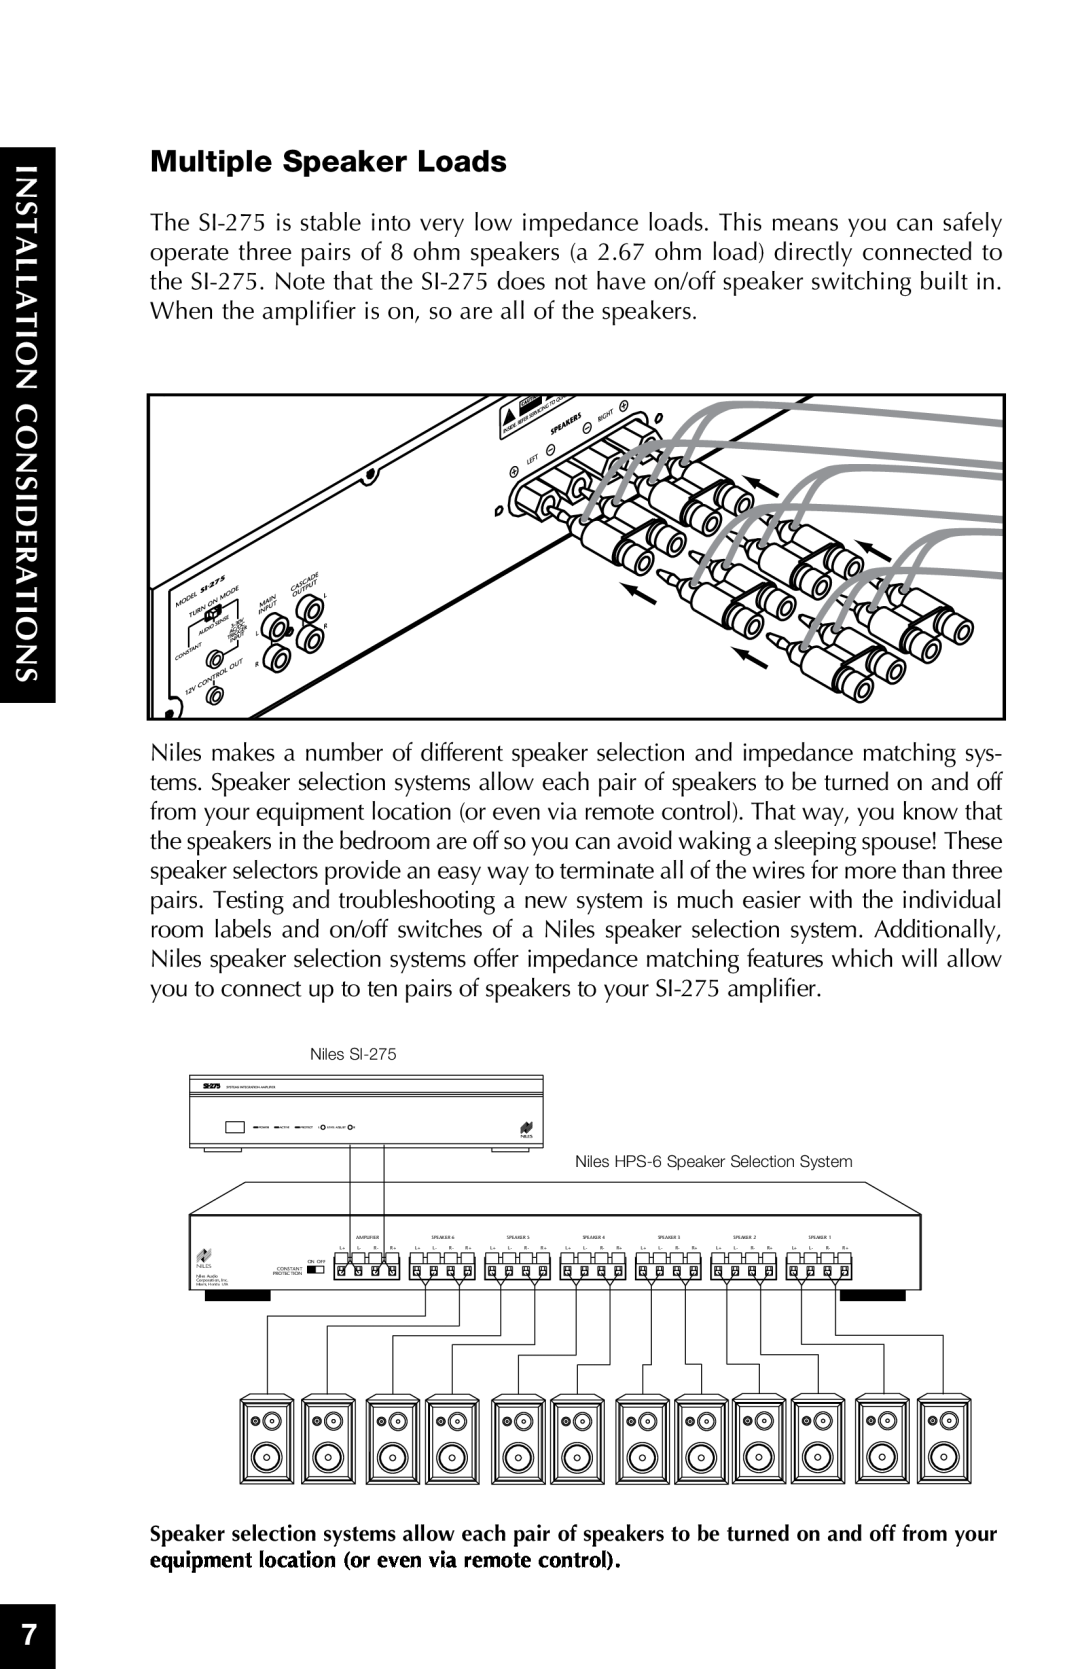 Niles Audio SI-275 manual Multiple Speaker Loads, Installation Considerations 